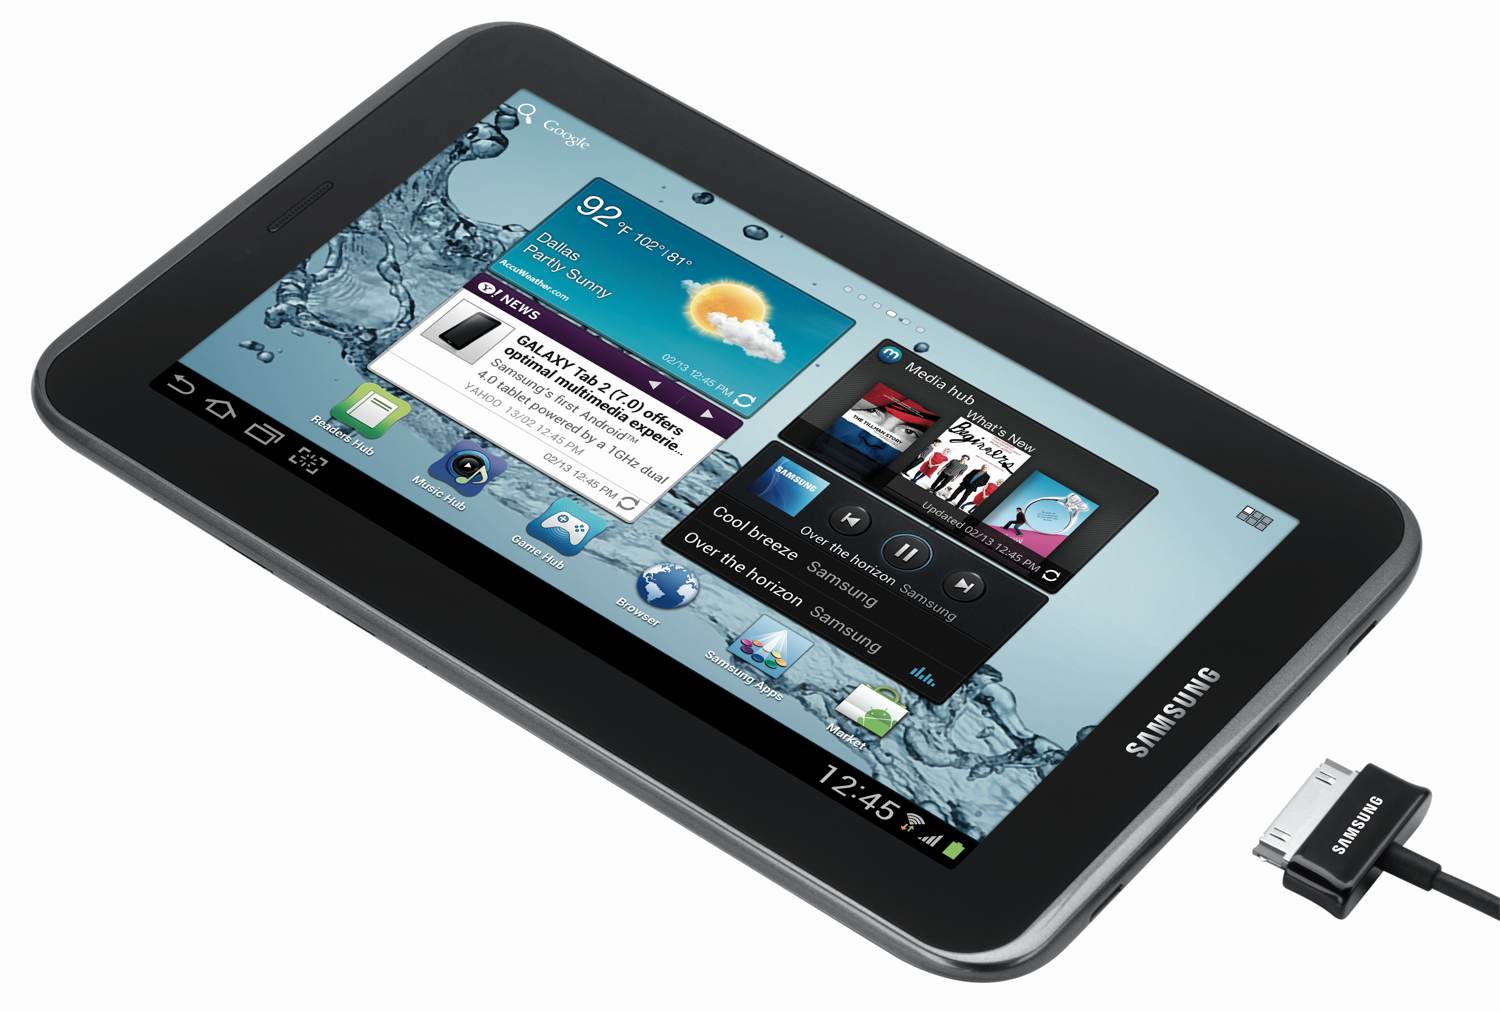 Samsung Galaxy Tab 2 in Safe Mode